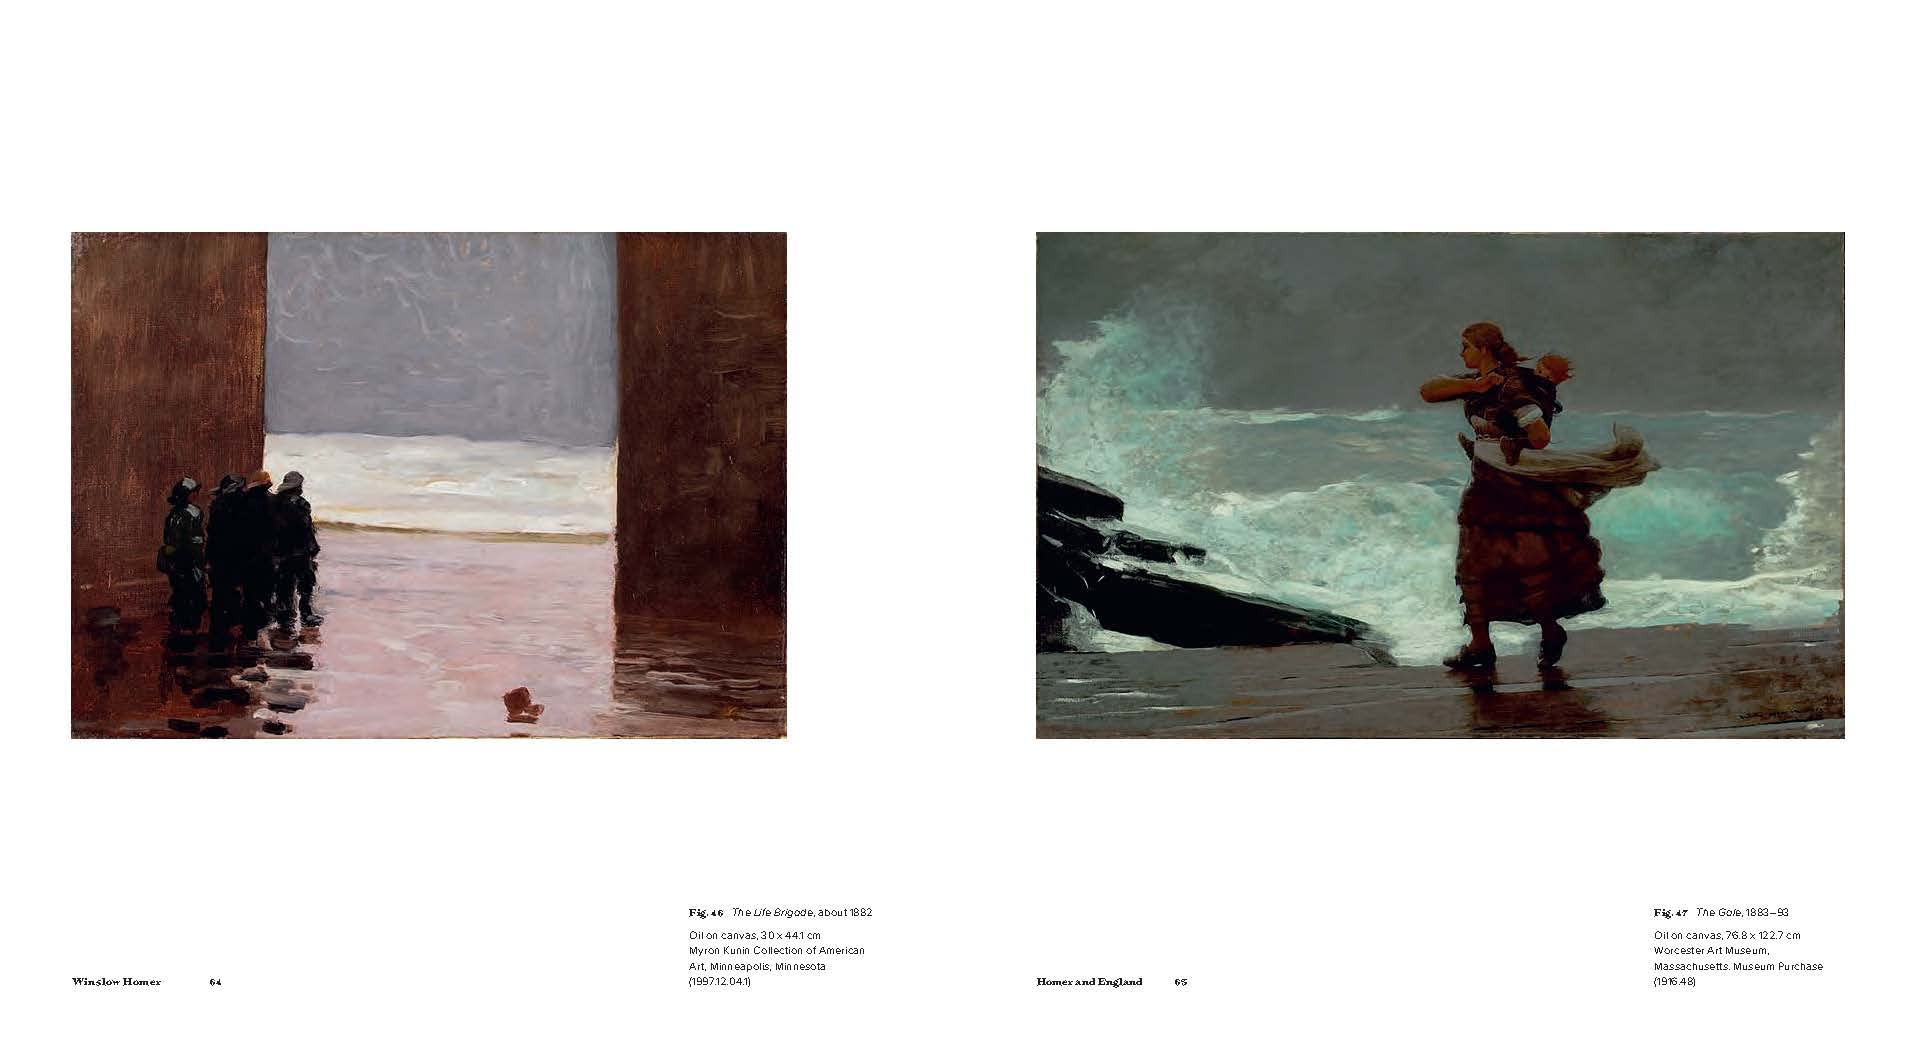 Winslow Homer: Crosscurrents